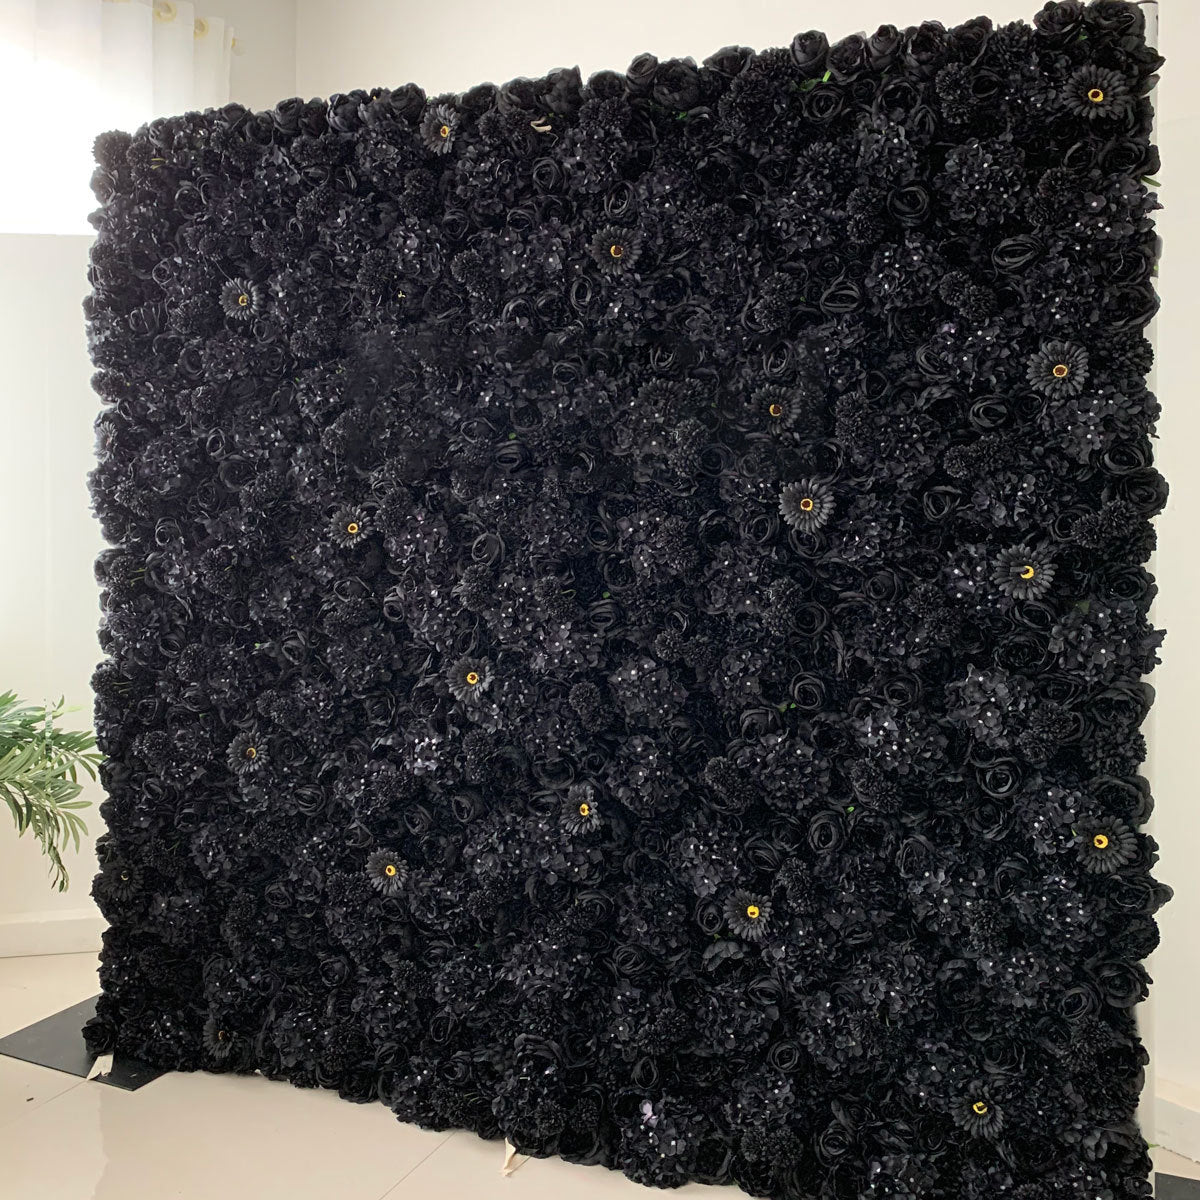 3D Artificial Flower Wall Arrangement Wedding Party Birthday Backdrop Decor HQ1163